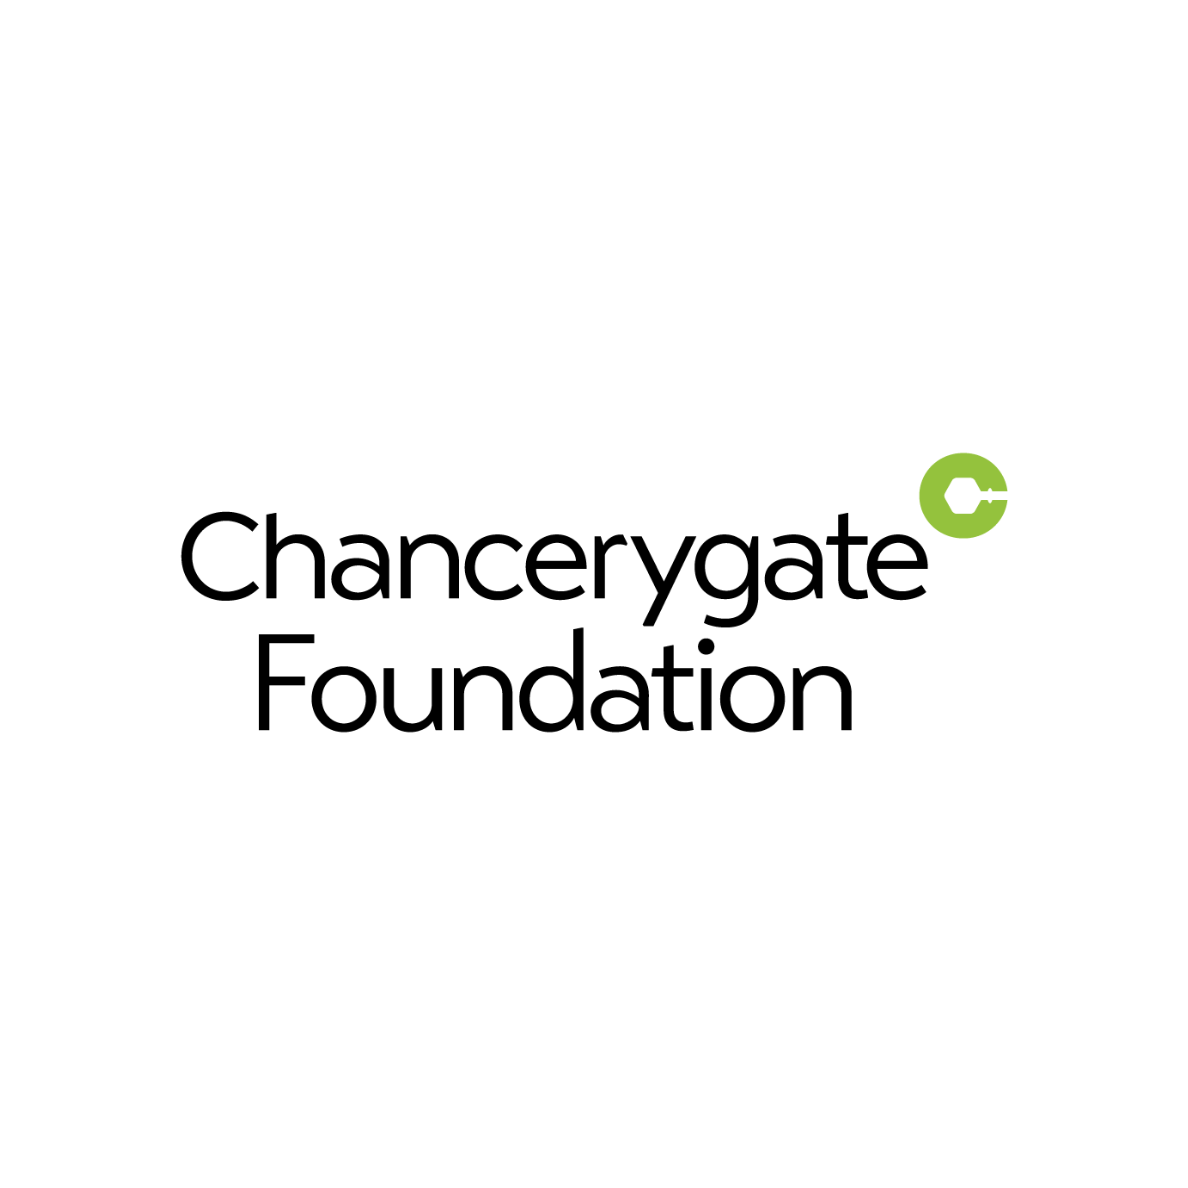 Chancerygate